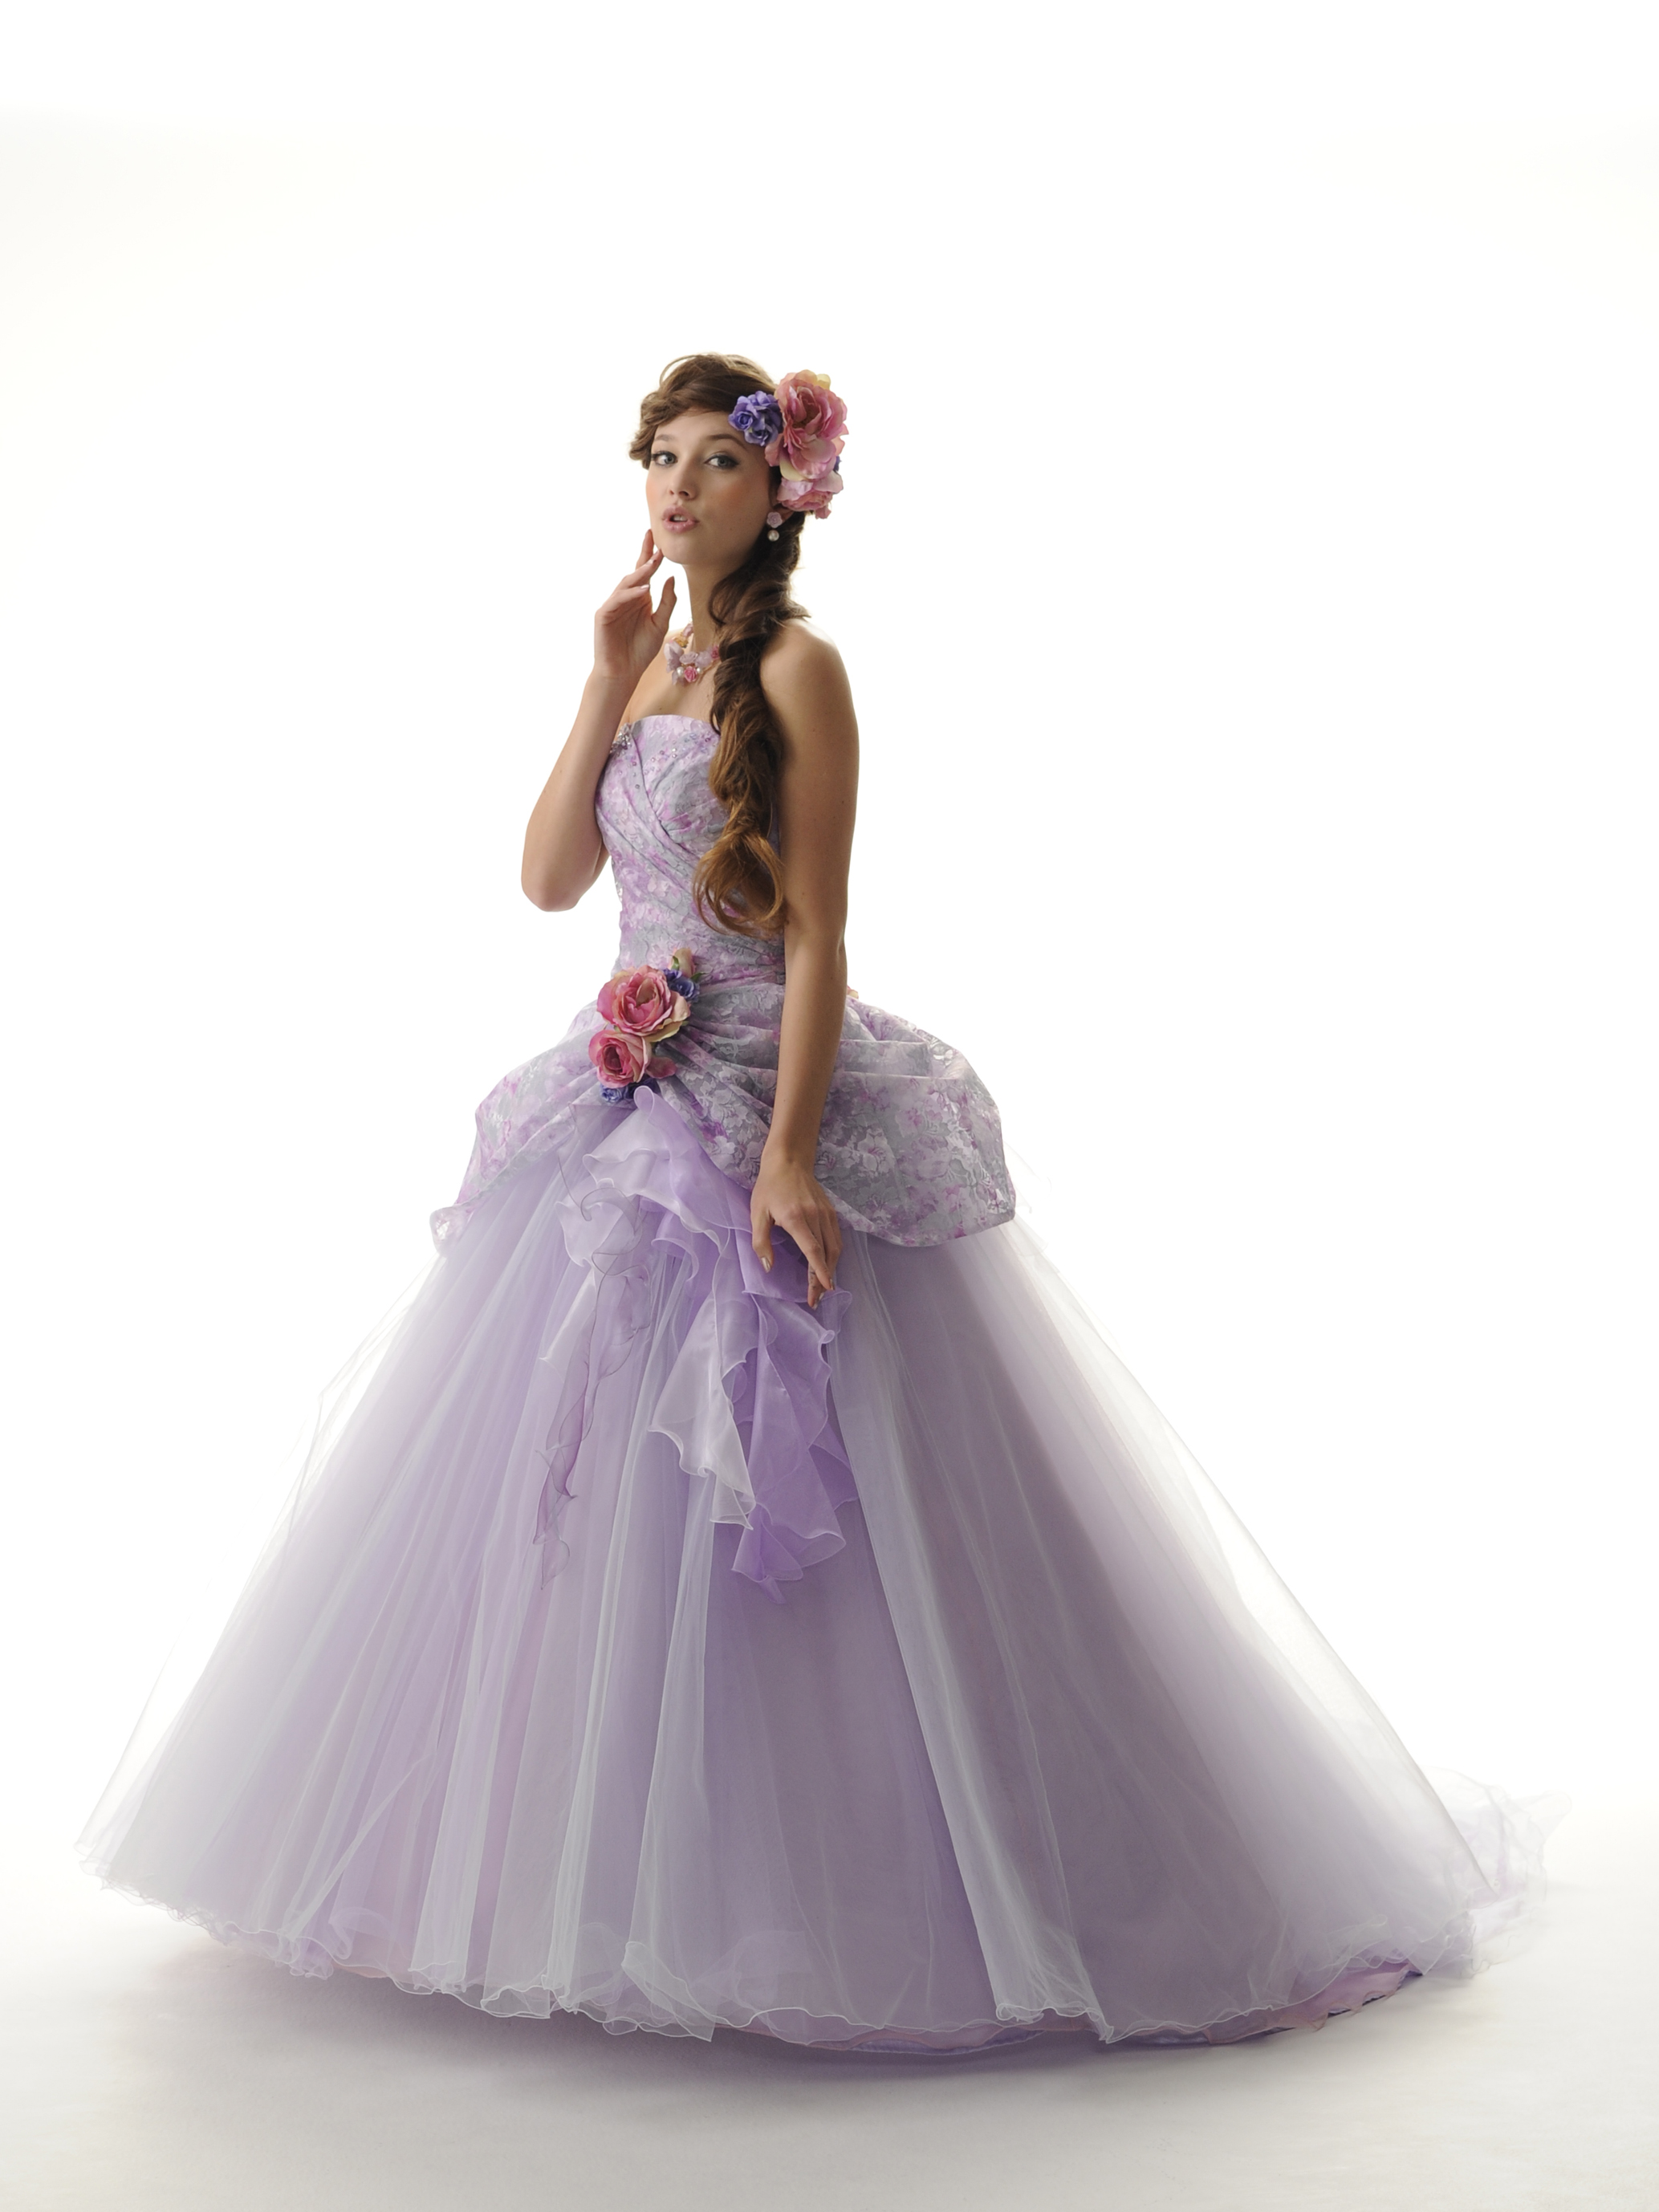 Takami Bridal オリジナルカラードレスコレクション Champs De Fleurs 14 年 4 月新作発表 高見株式会社のプレスリリース